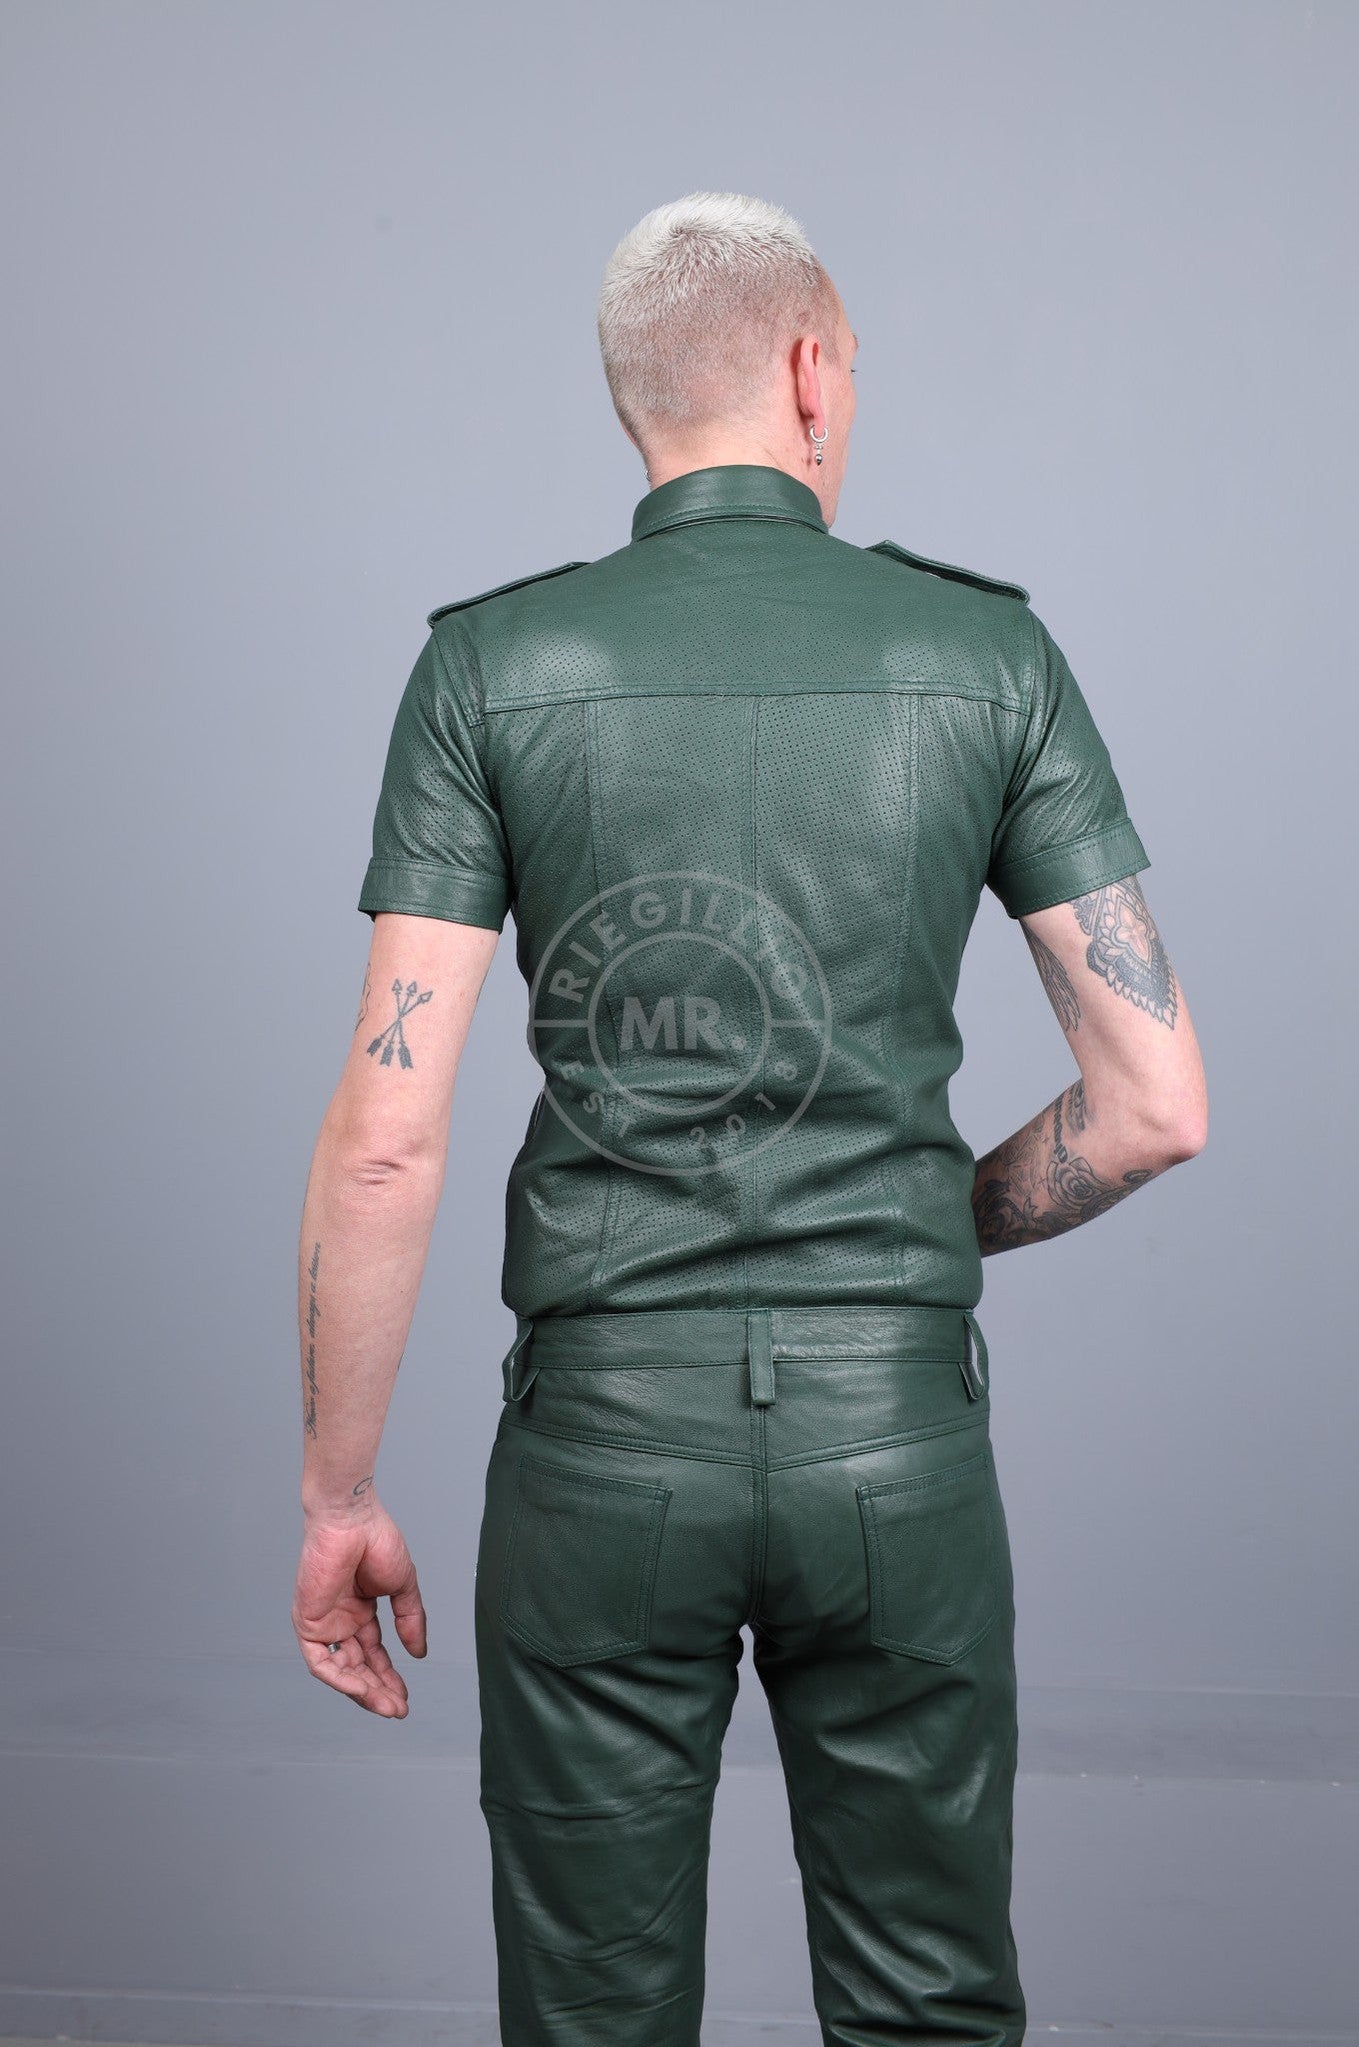 Dark Green Leather Perforated Shirt at MR. Riegillio